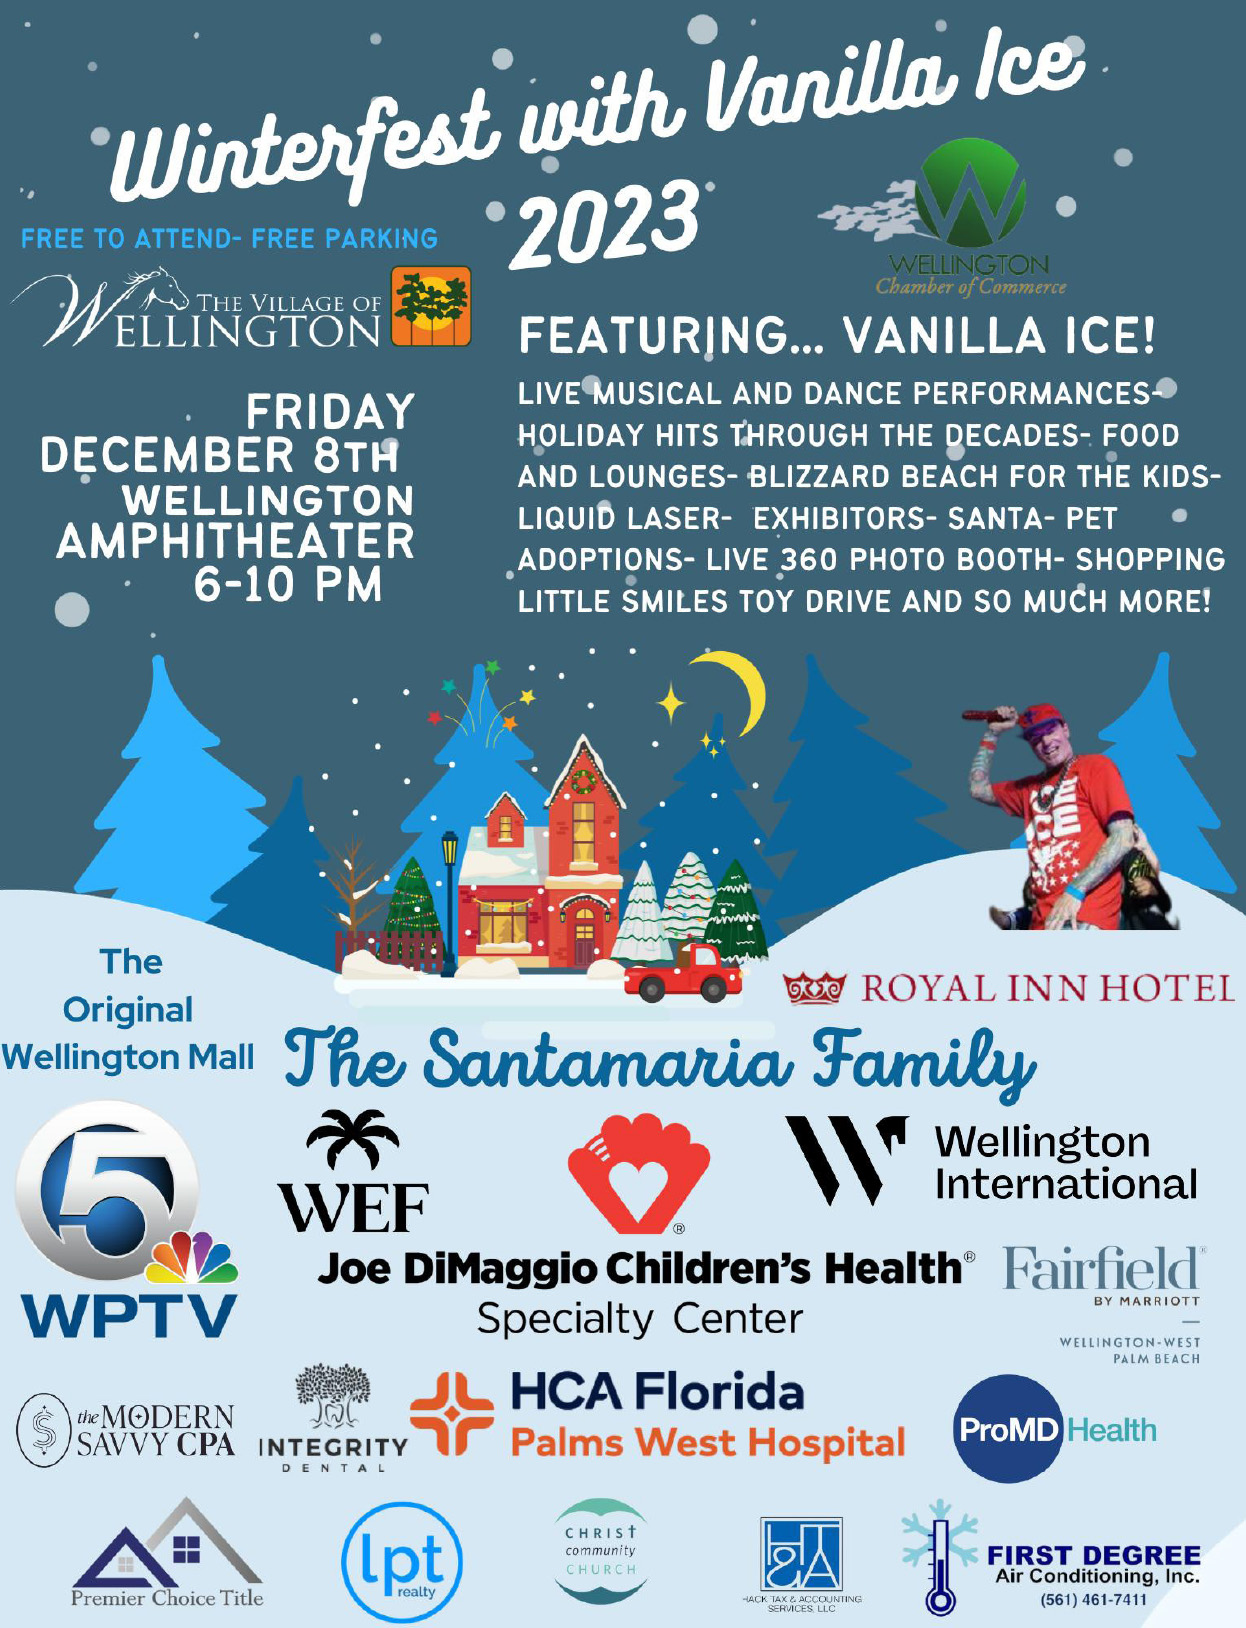 Winter fest with Vanilla Ice 2023 in Wellington Florida